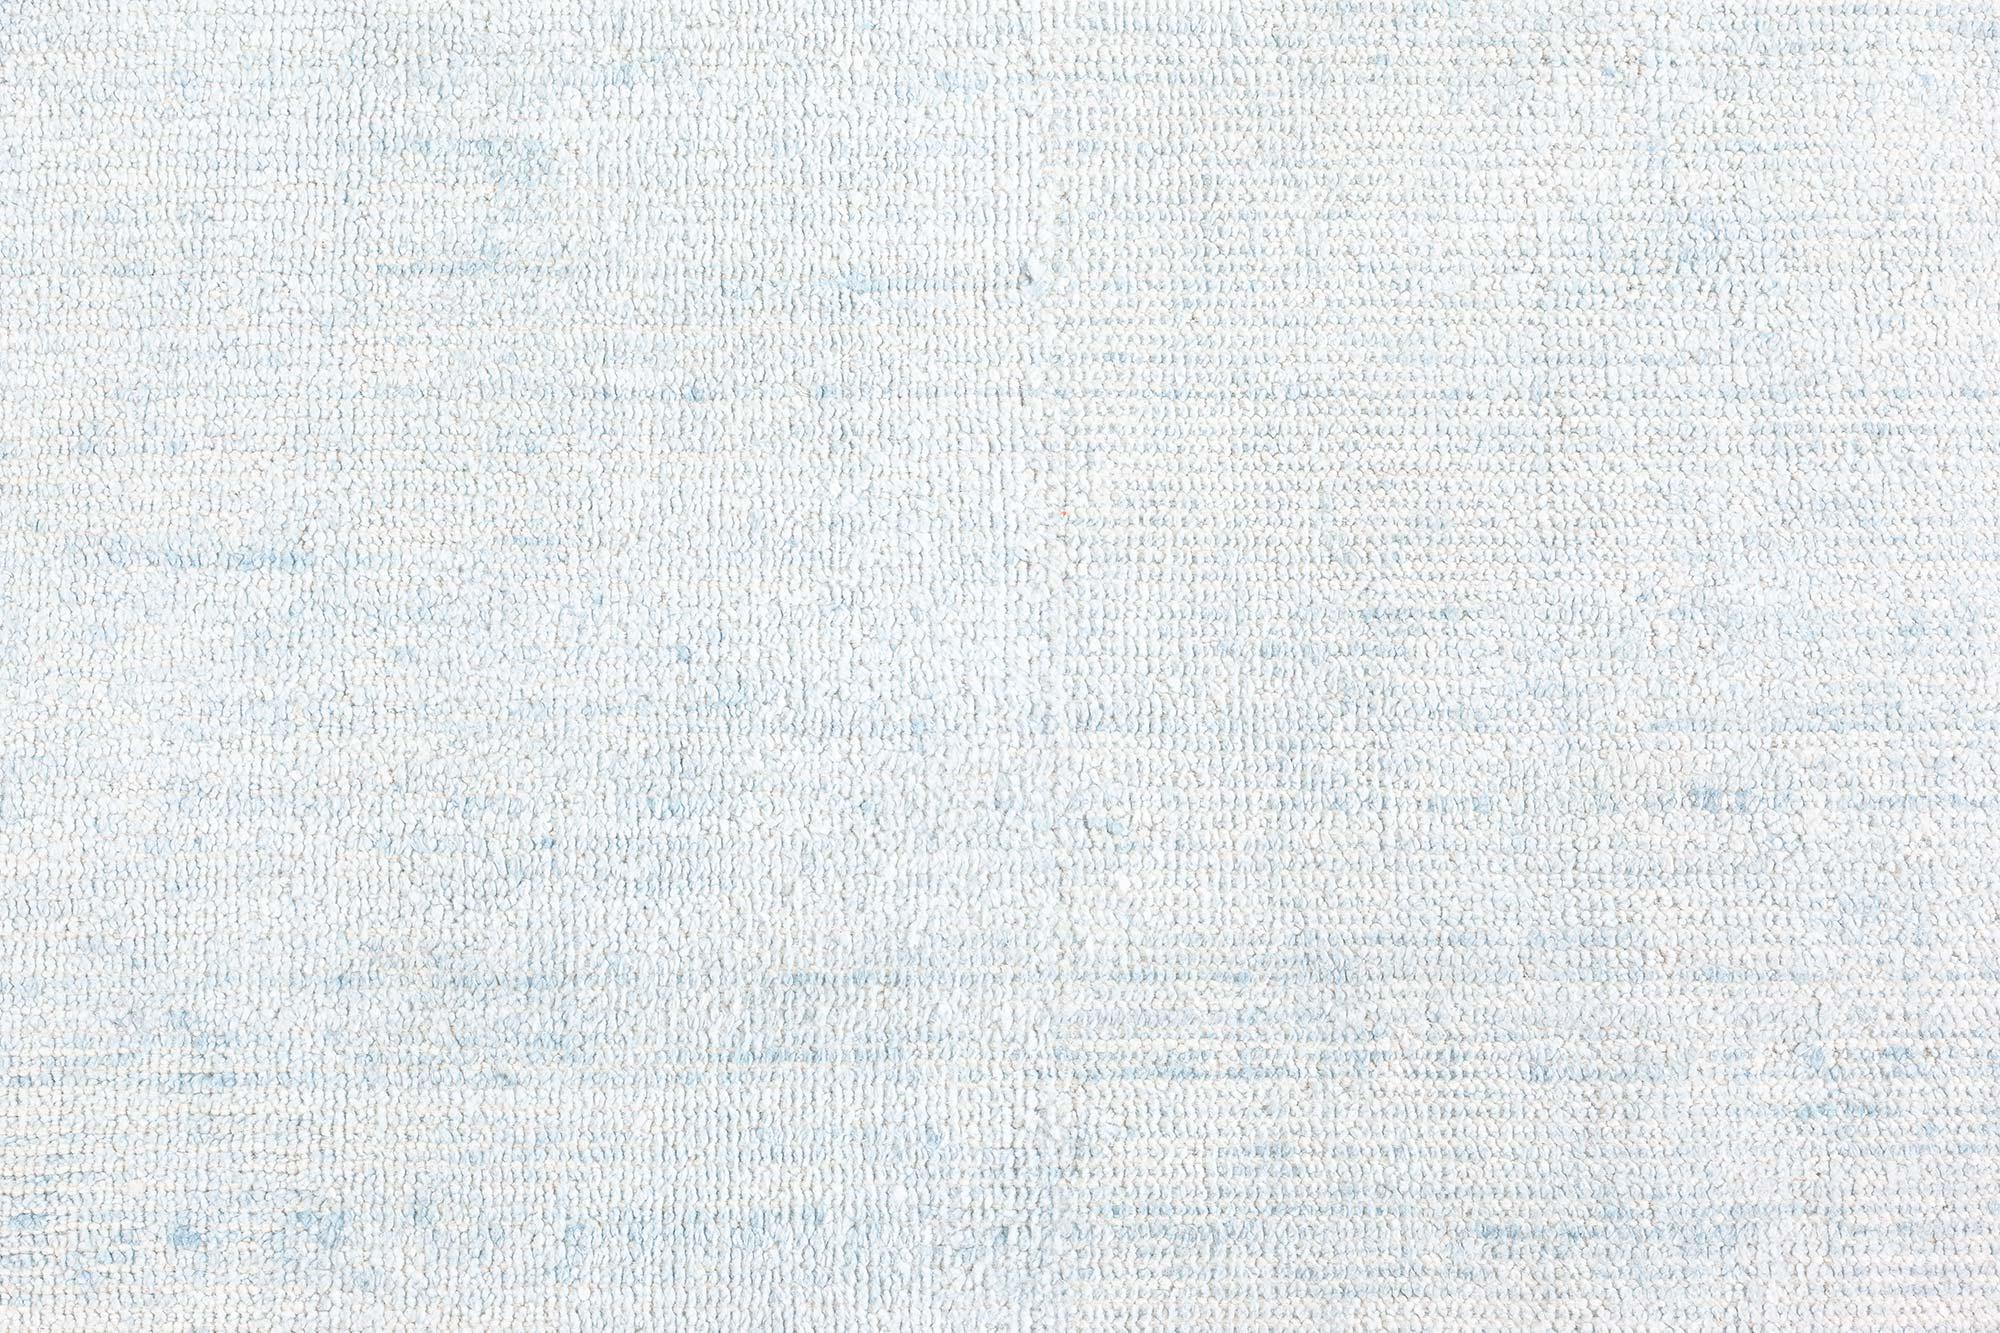 Contemporary Aqua-blue Wool Rug by Doris Leslie Blau
Size: 3'5